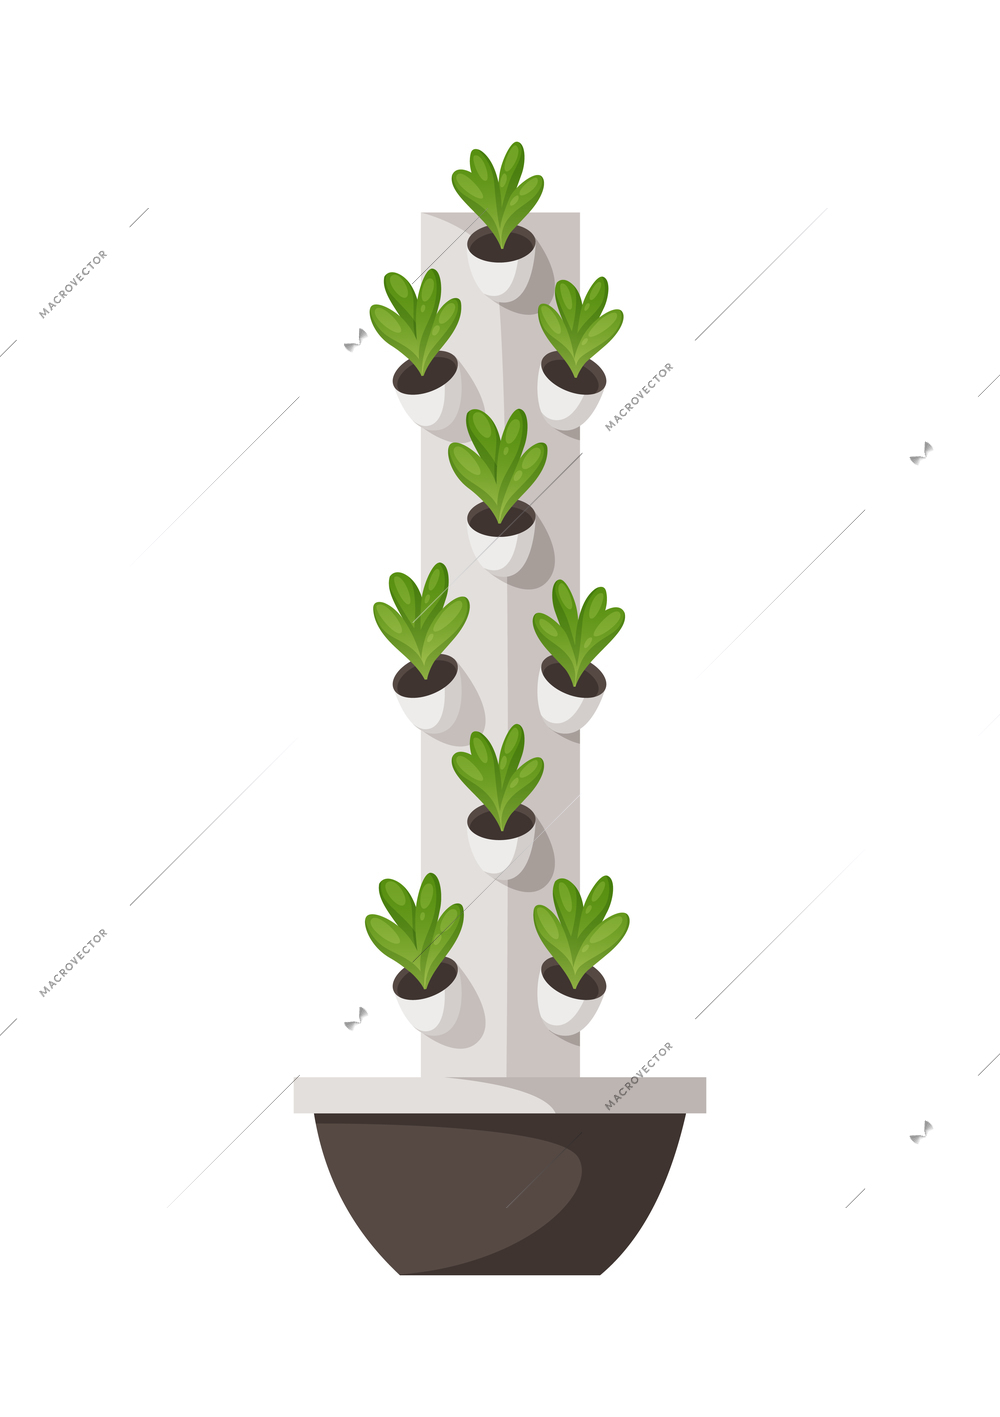 Greenhouse vertical farming hydroponics aeroponics cartoon composition with plants in column vector illustration